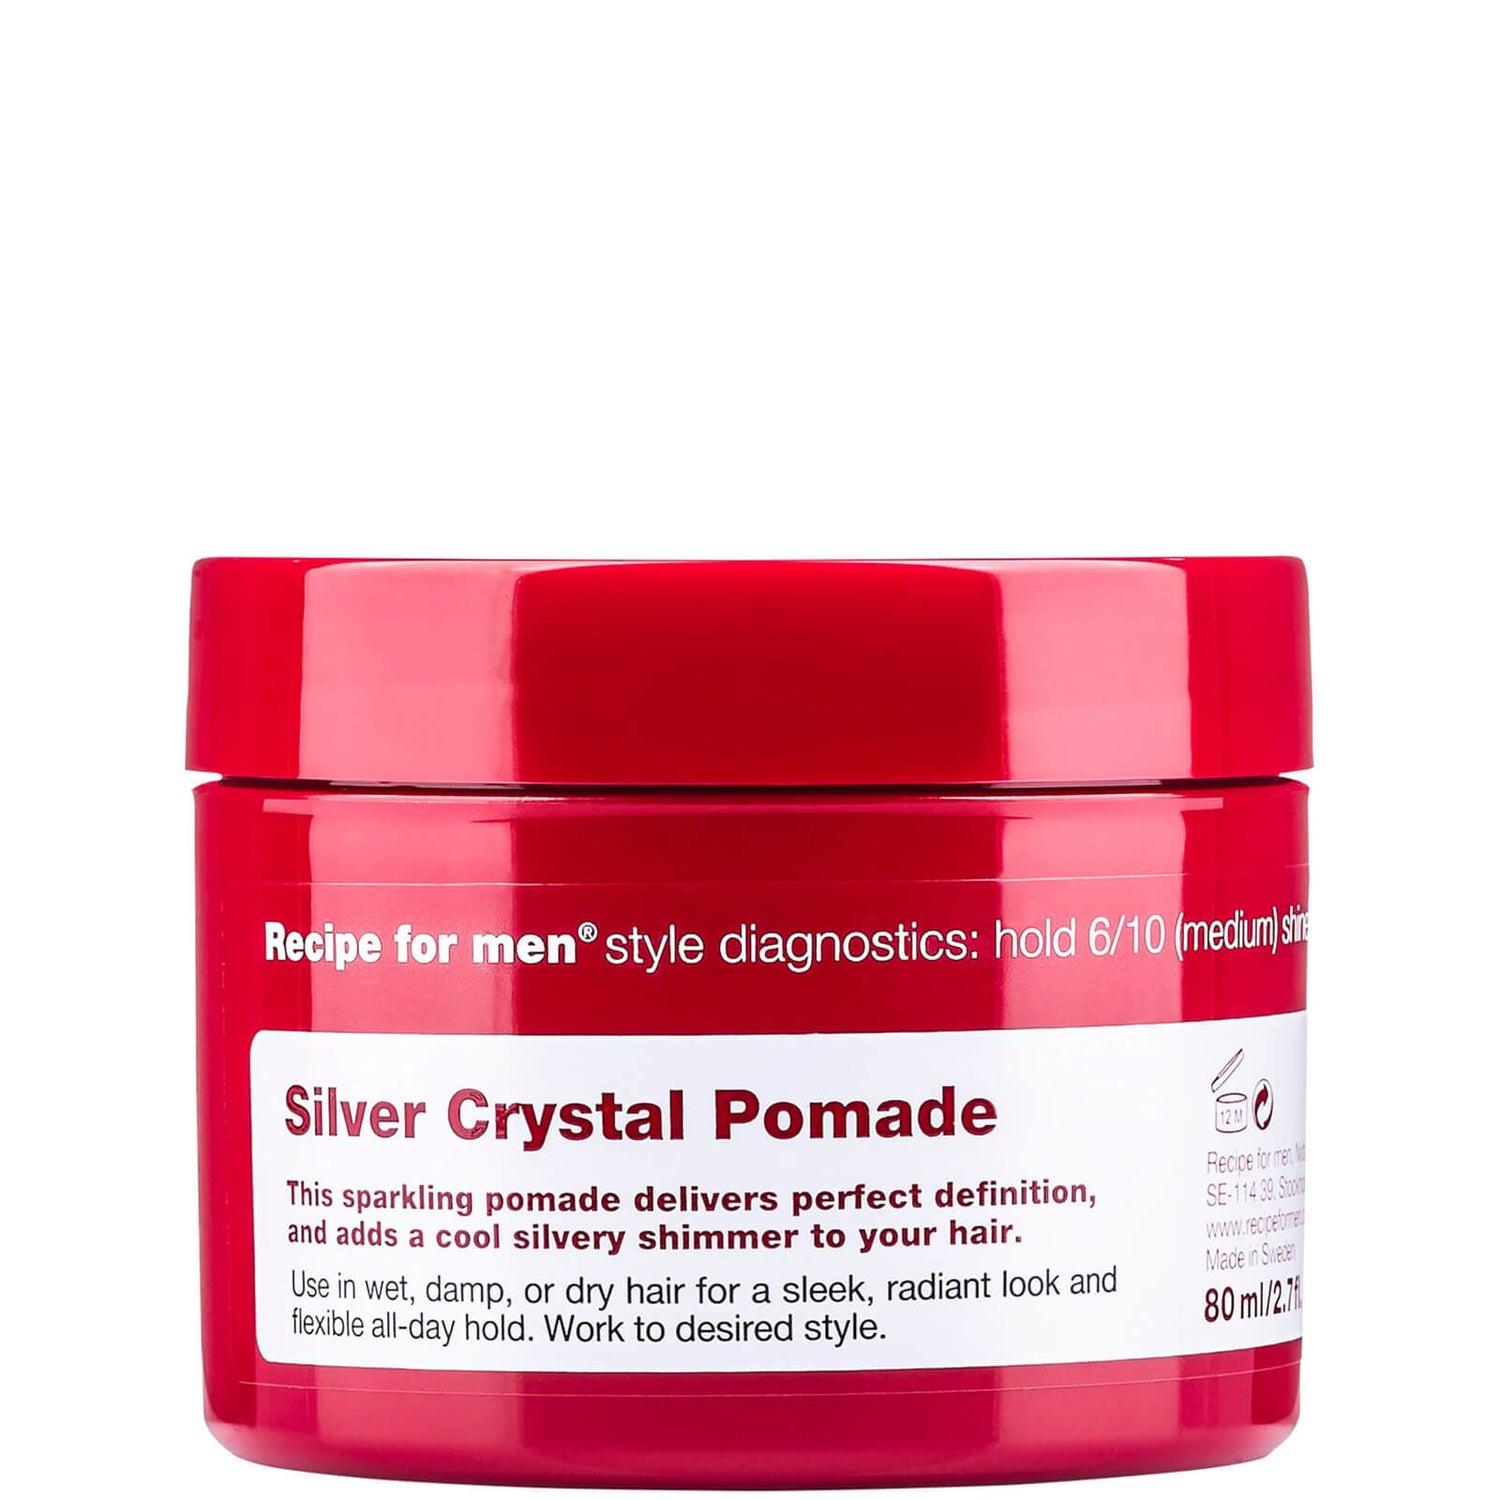 Pomada Silver Crystal de Recipe for Men 80 ml